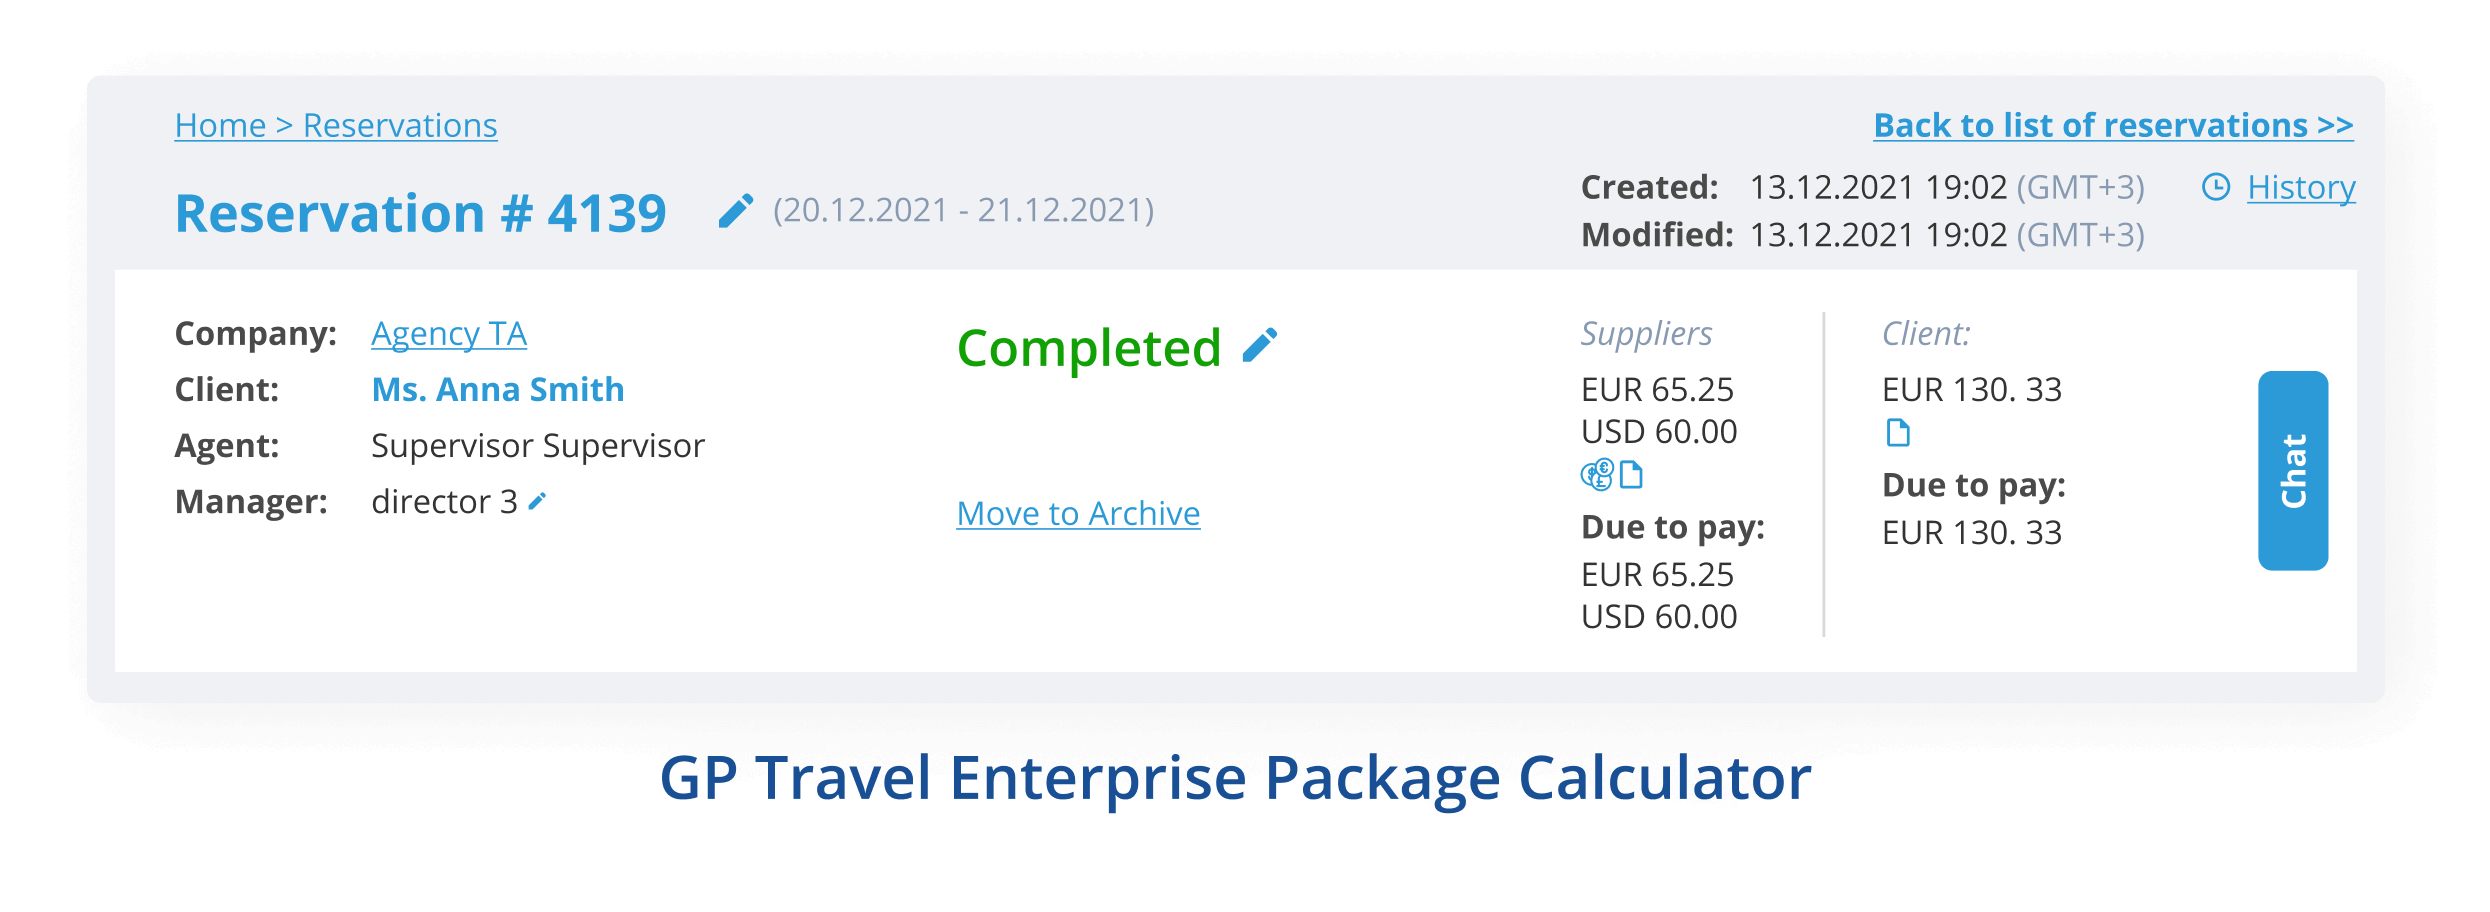 Package Calculator by GP Travel Enterprise